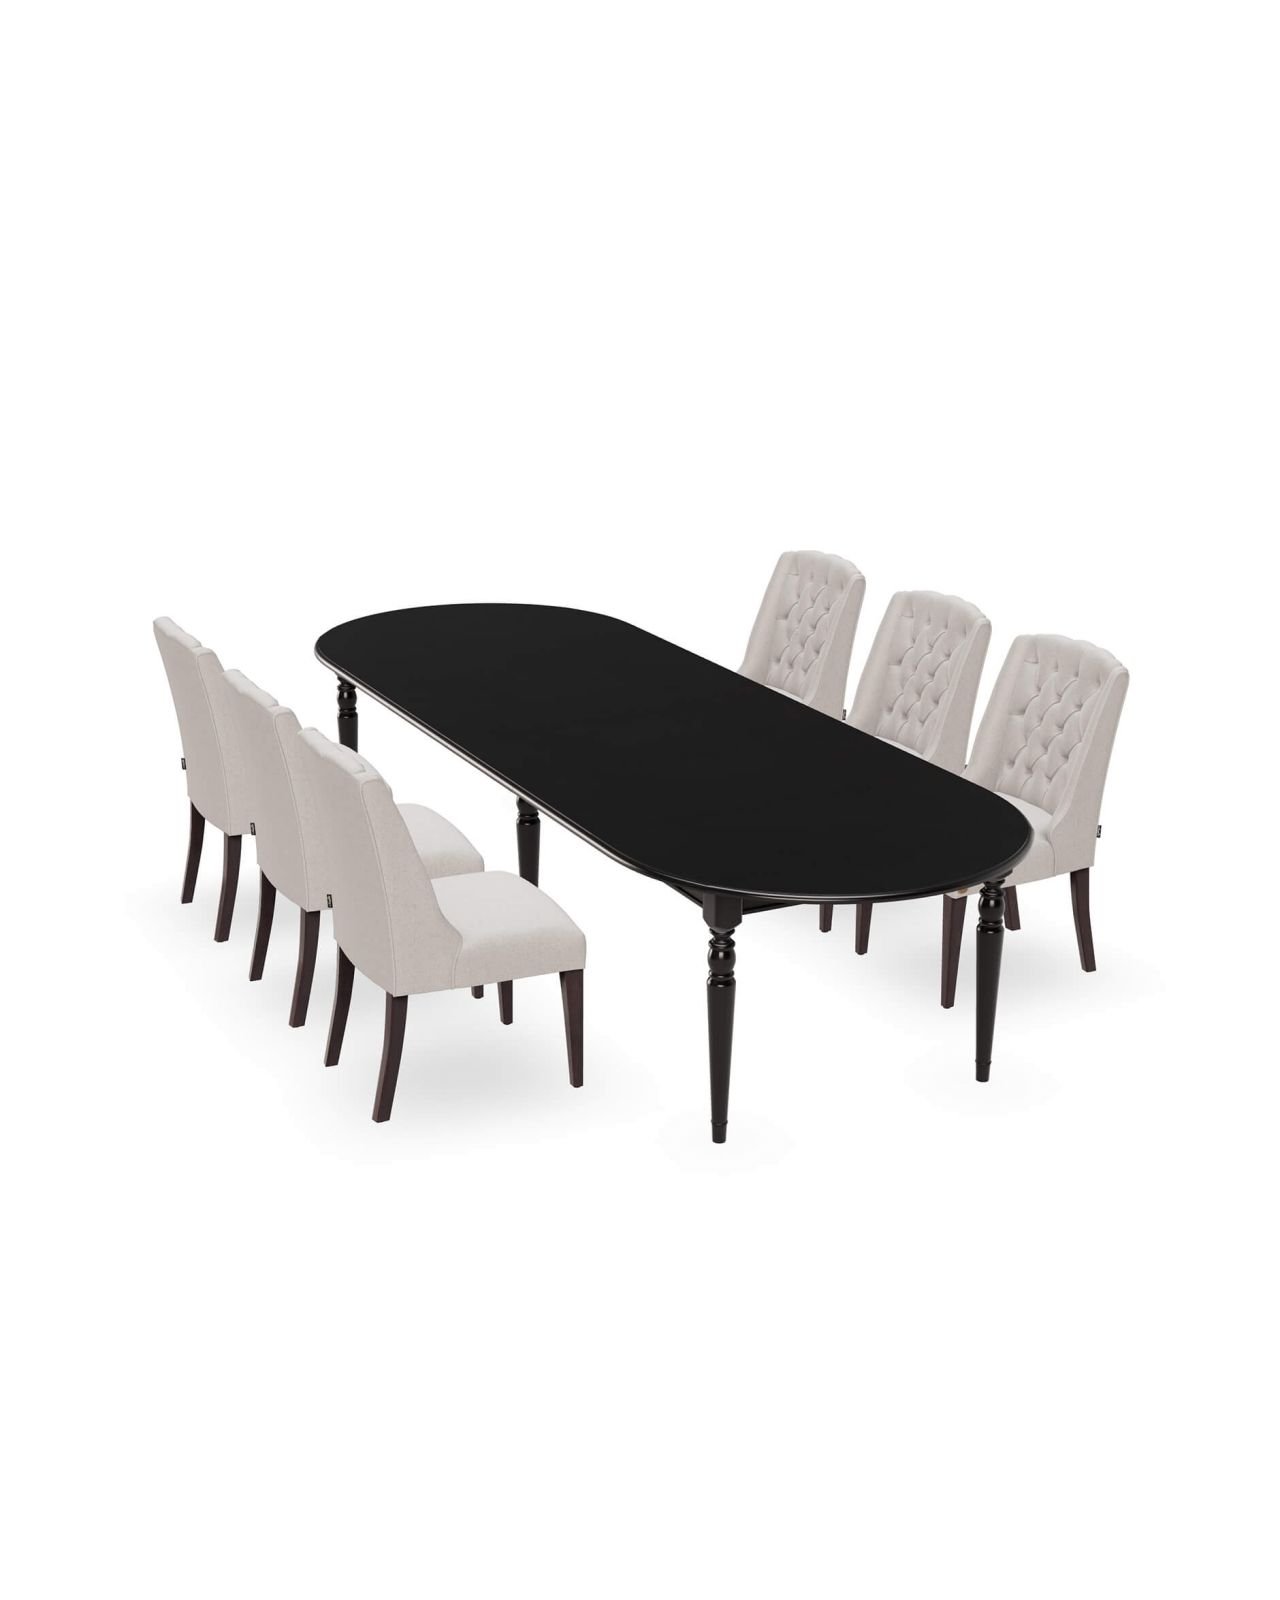 Osterville matbord modern black med Venice matstol sand